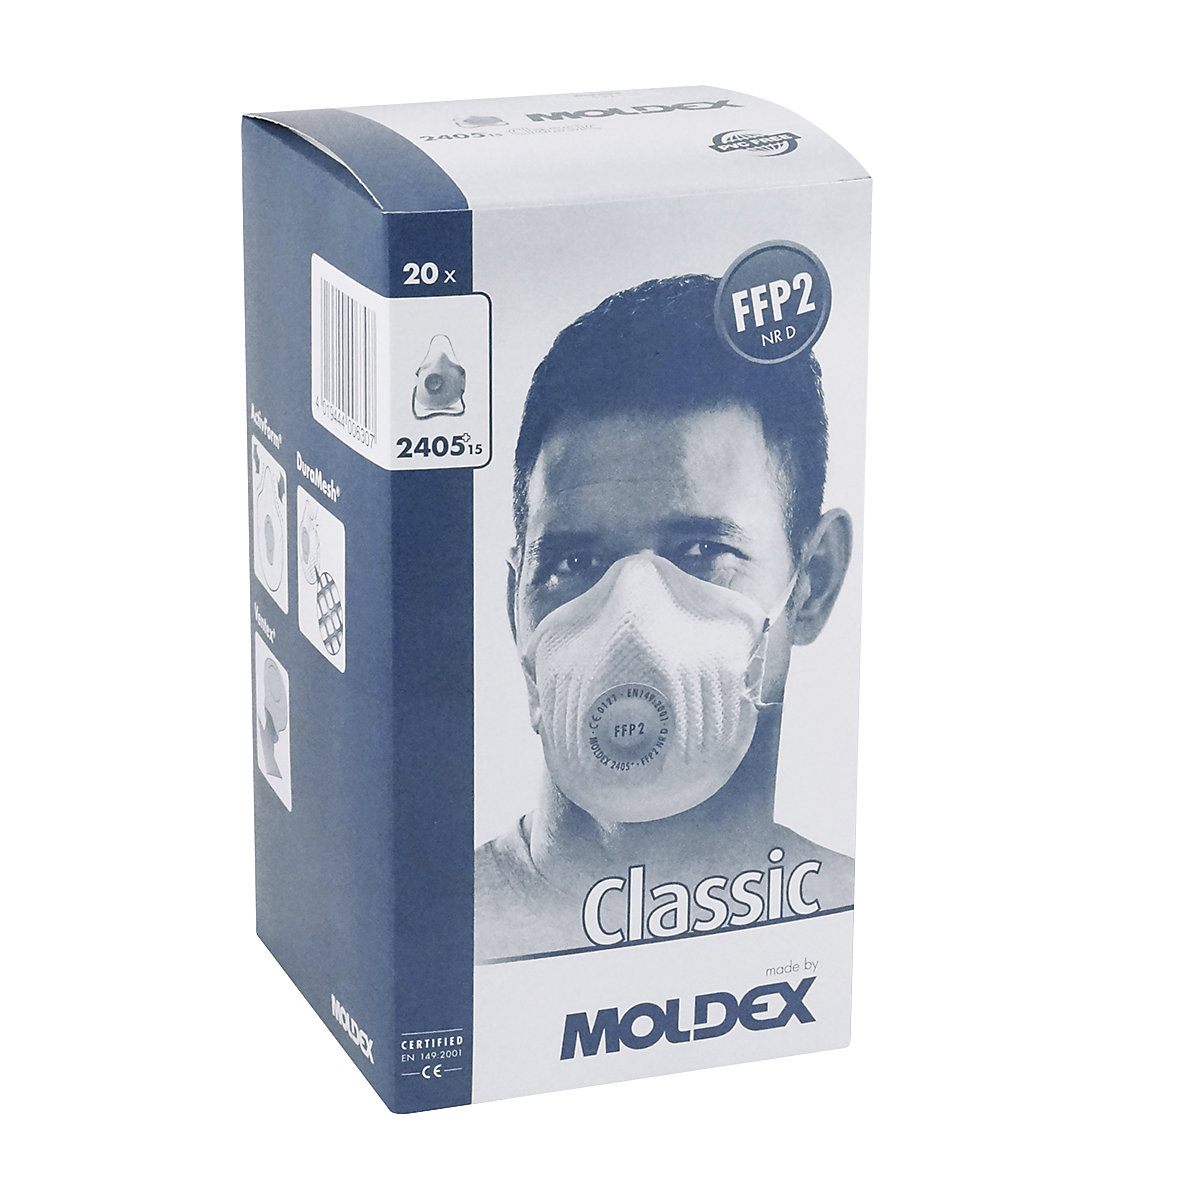 Maska ochronna FFP2 NR D – MOLDEX (Zdjęcie produktu 2)-1